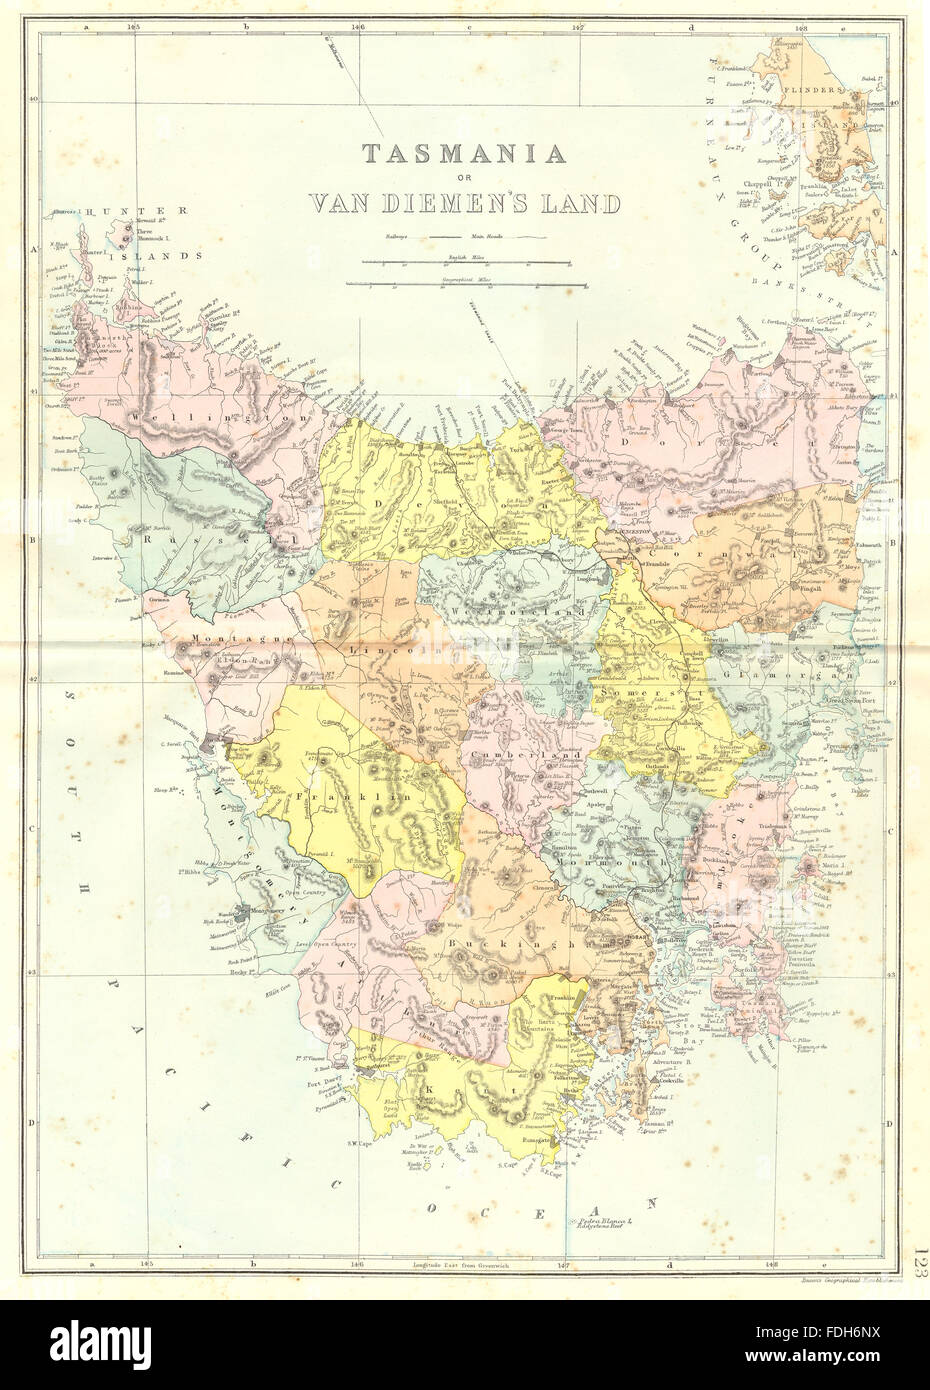 AUSTRALIA: Tasmania or Van Diemen's Land. Bacon, 1895 antique map Stock Photo